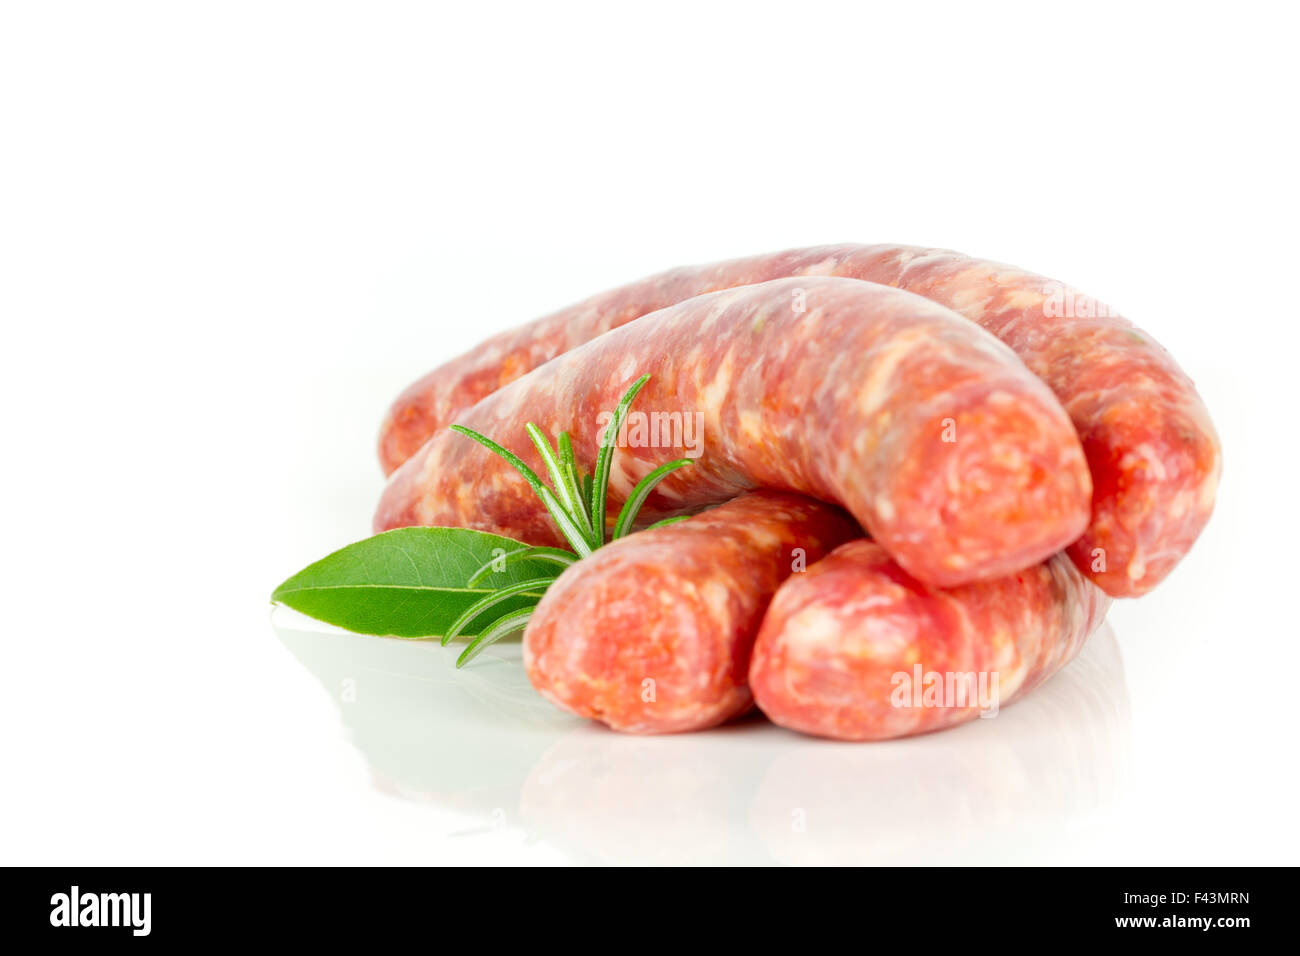 sausages Stock Photo